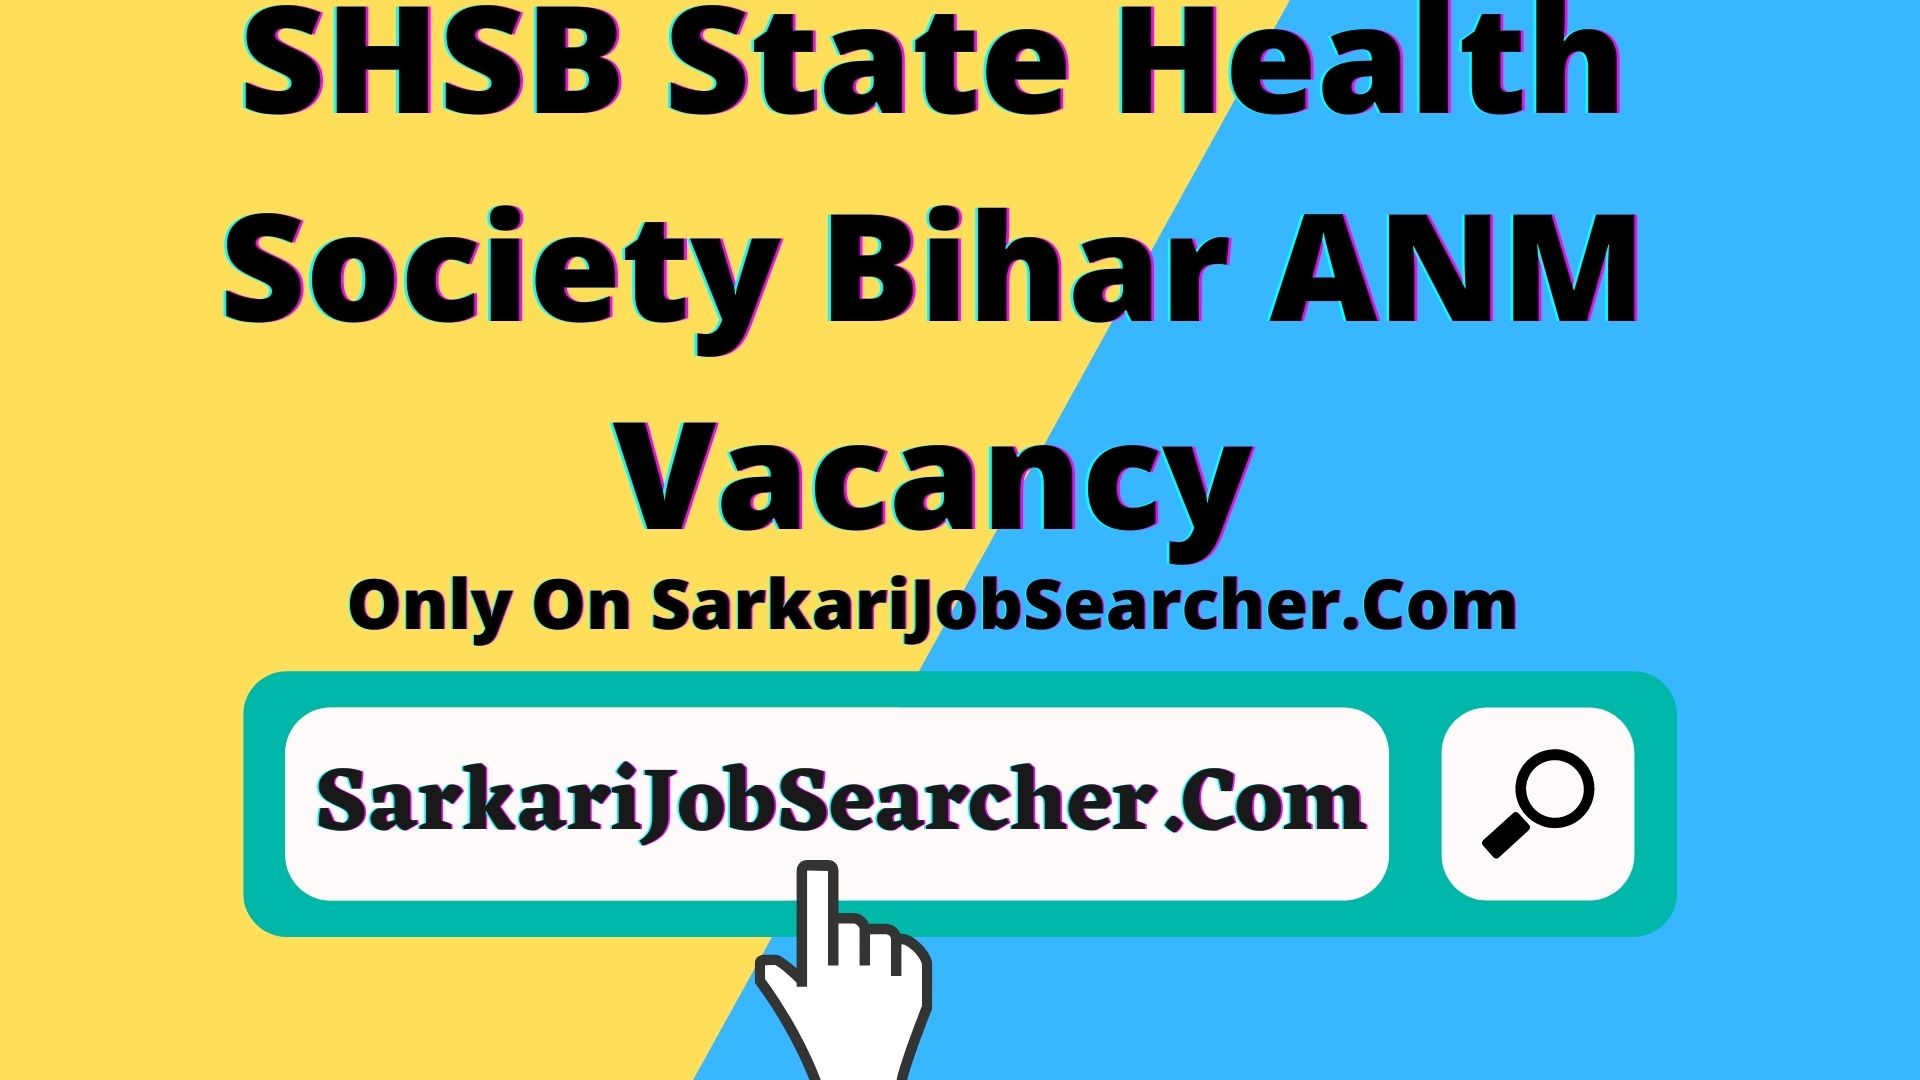 SHSB State Health Society Bihar ANM Vacancy